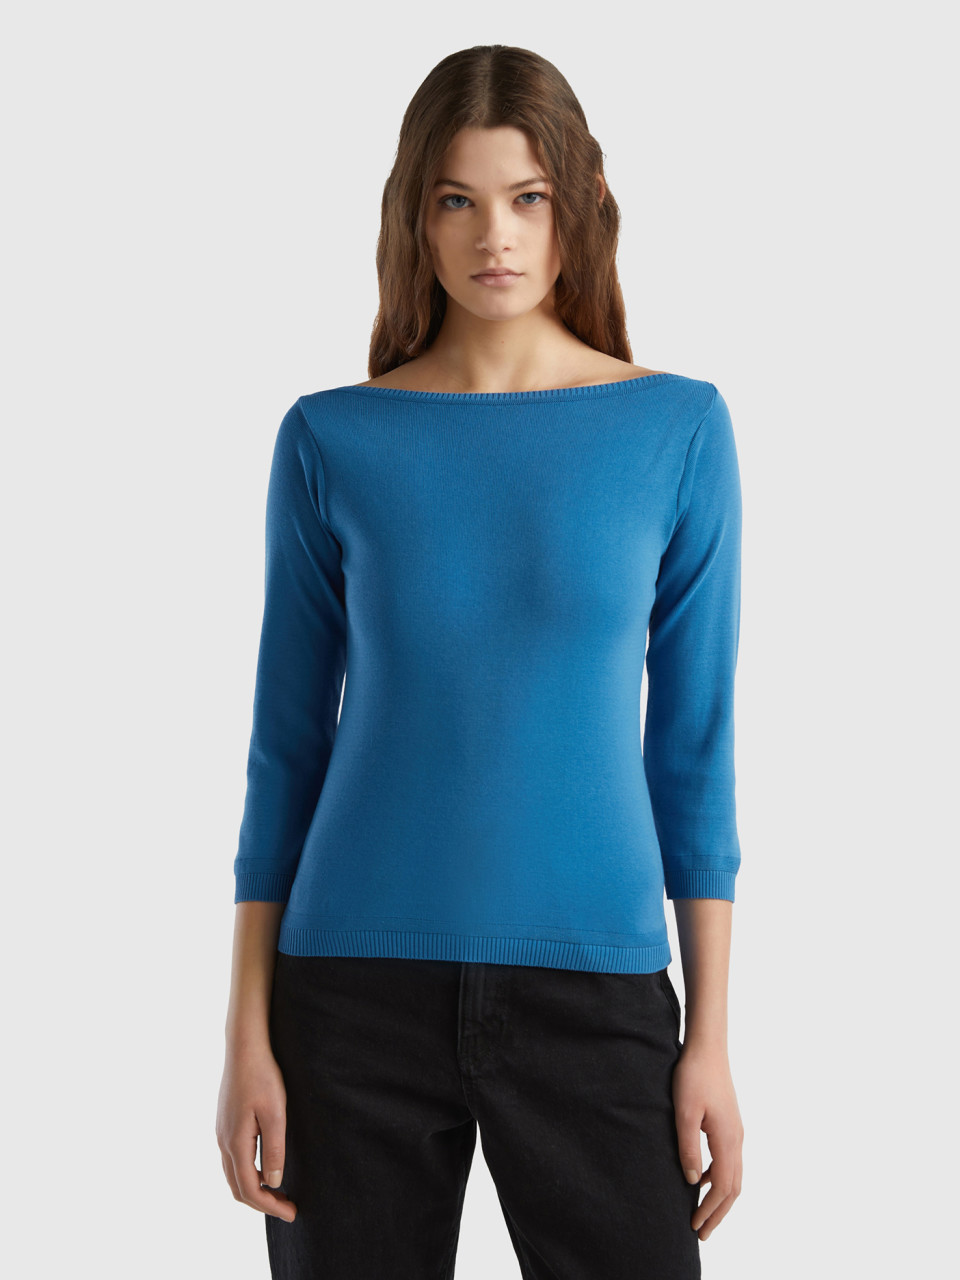 Benetton, 100% Cotton Boat Neck Sweater, Blue, Women